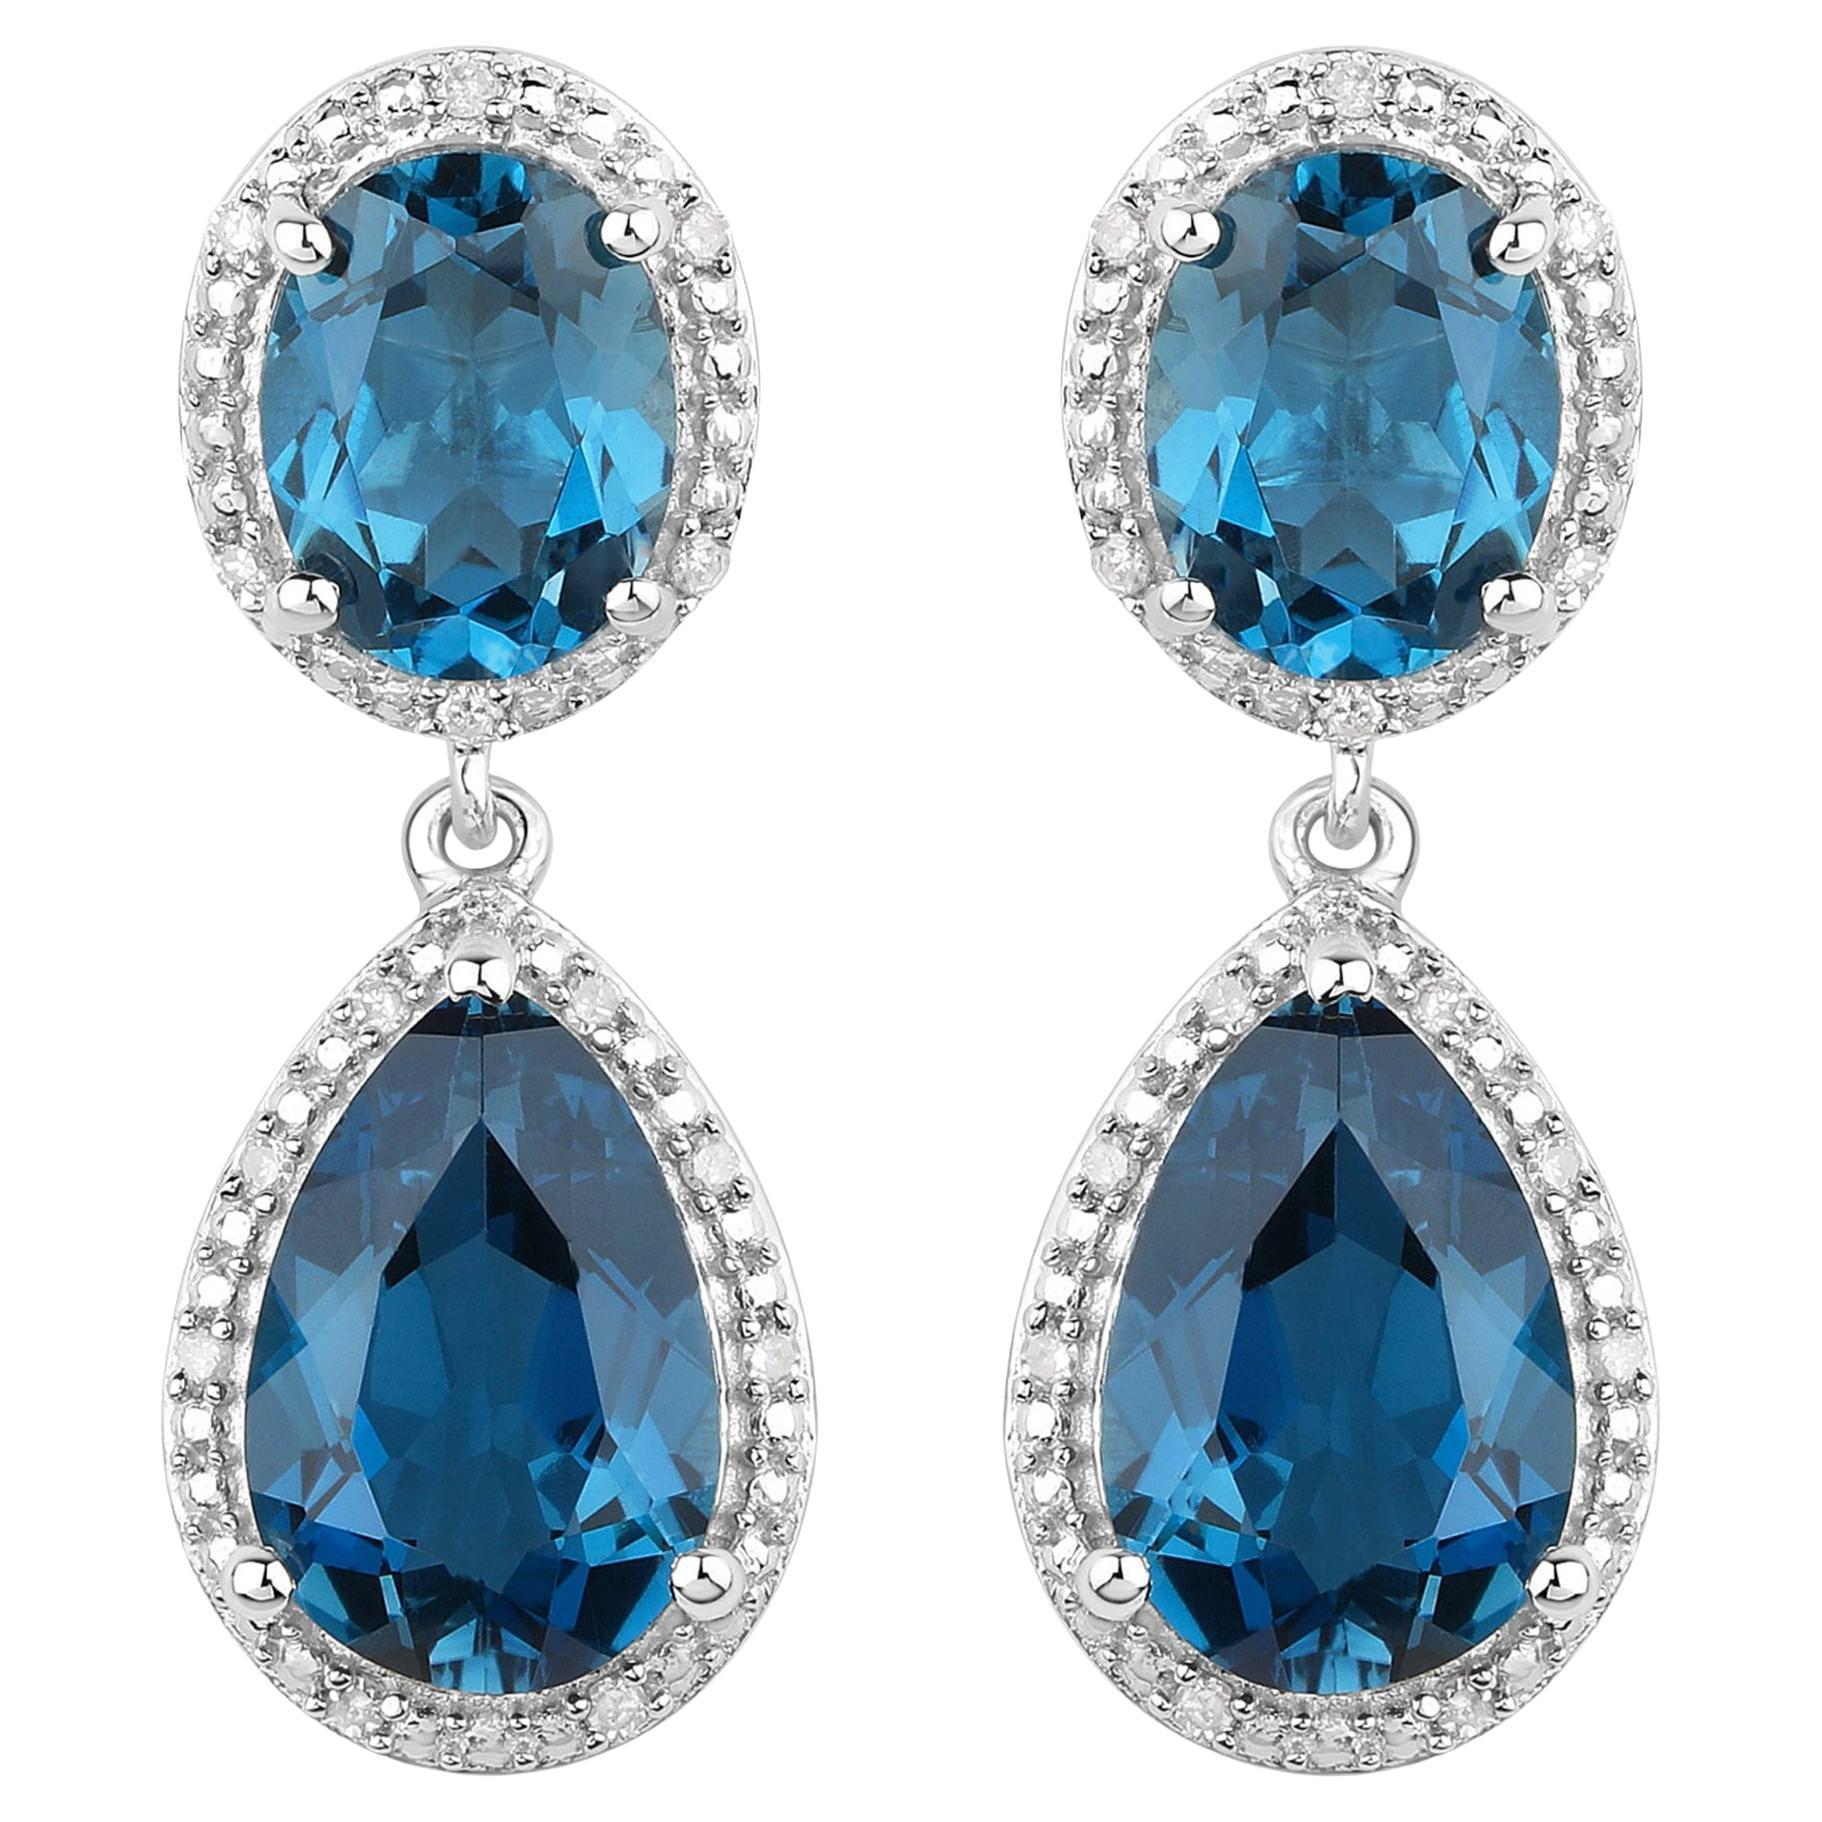 London Blue Topaz Earrings Diamond Setting 11.45 Carats Total For Sale